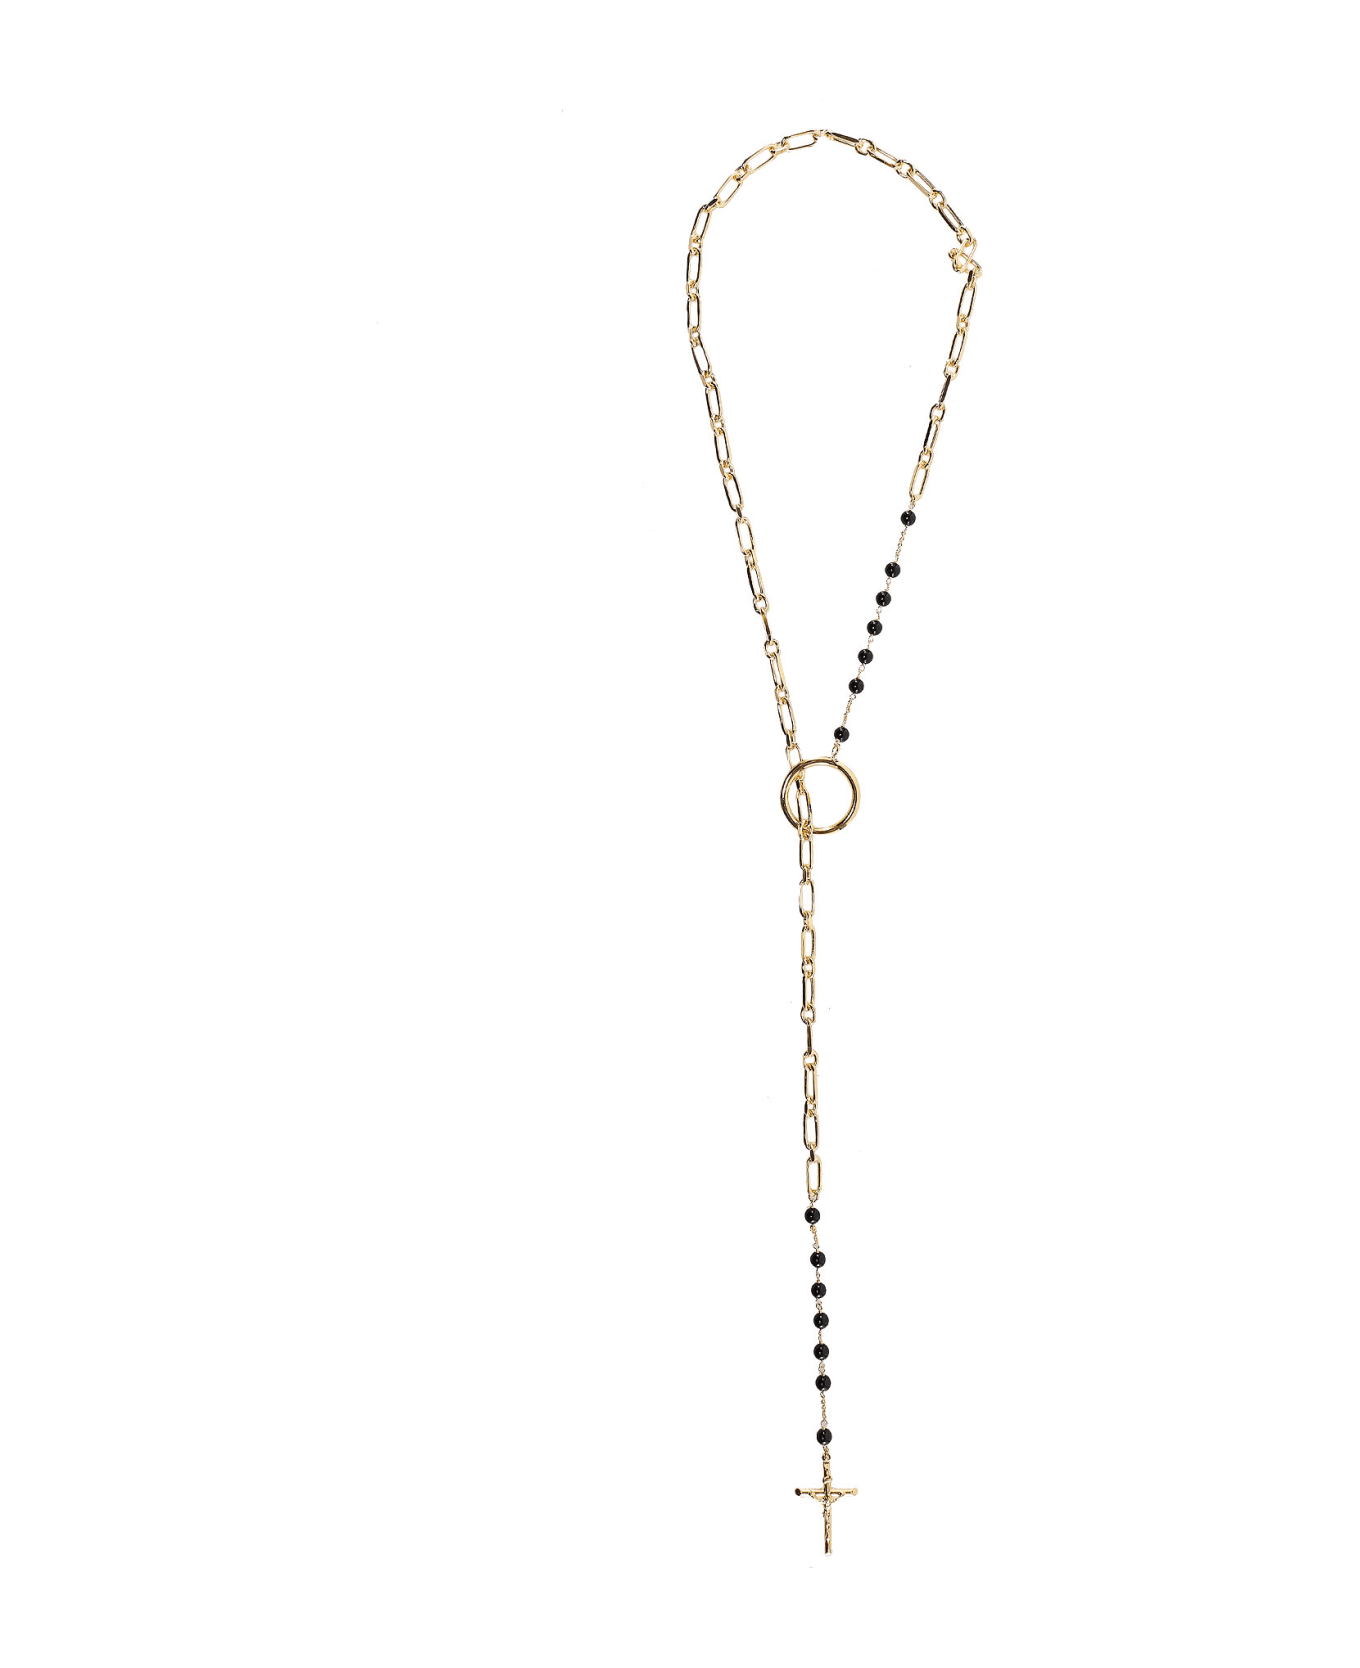 Dolce belt & Gabbana Cross Rosary Necklace - Gold